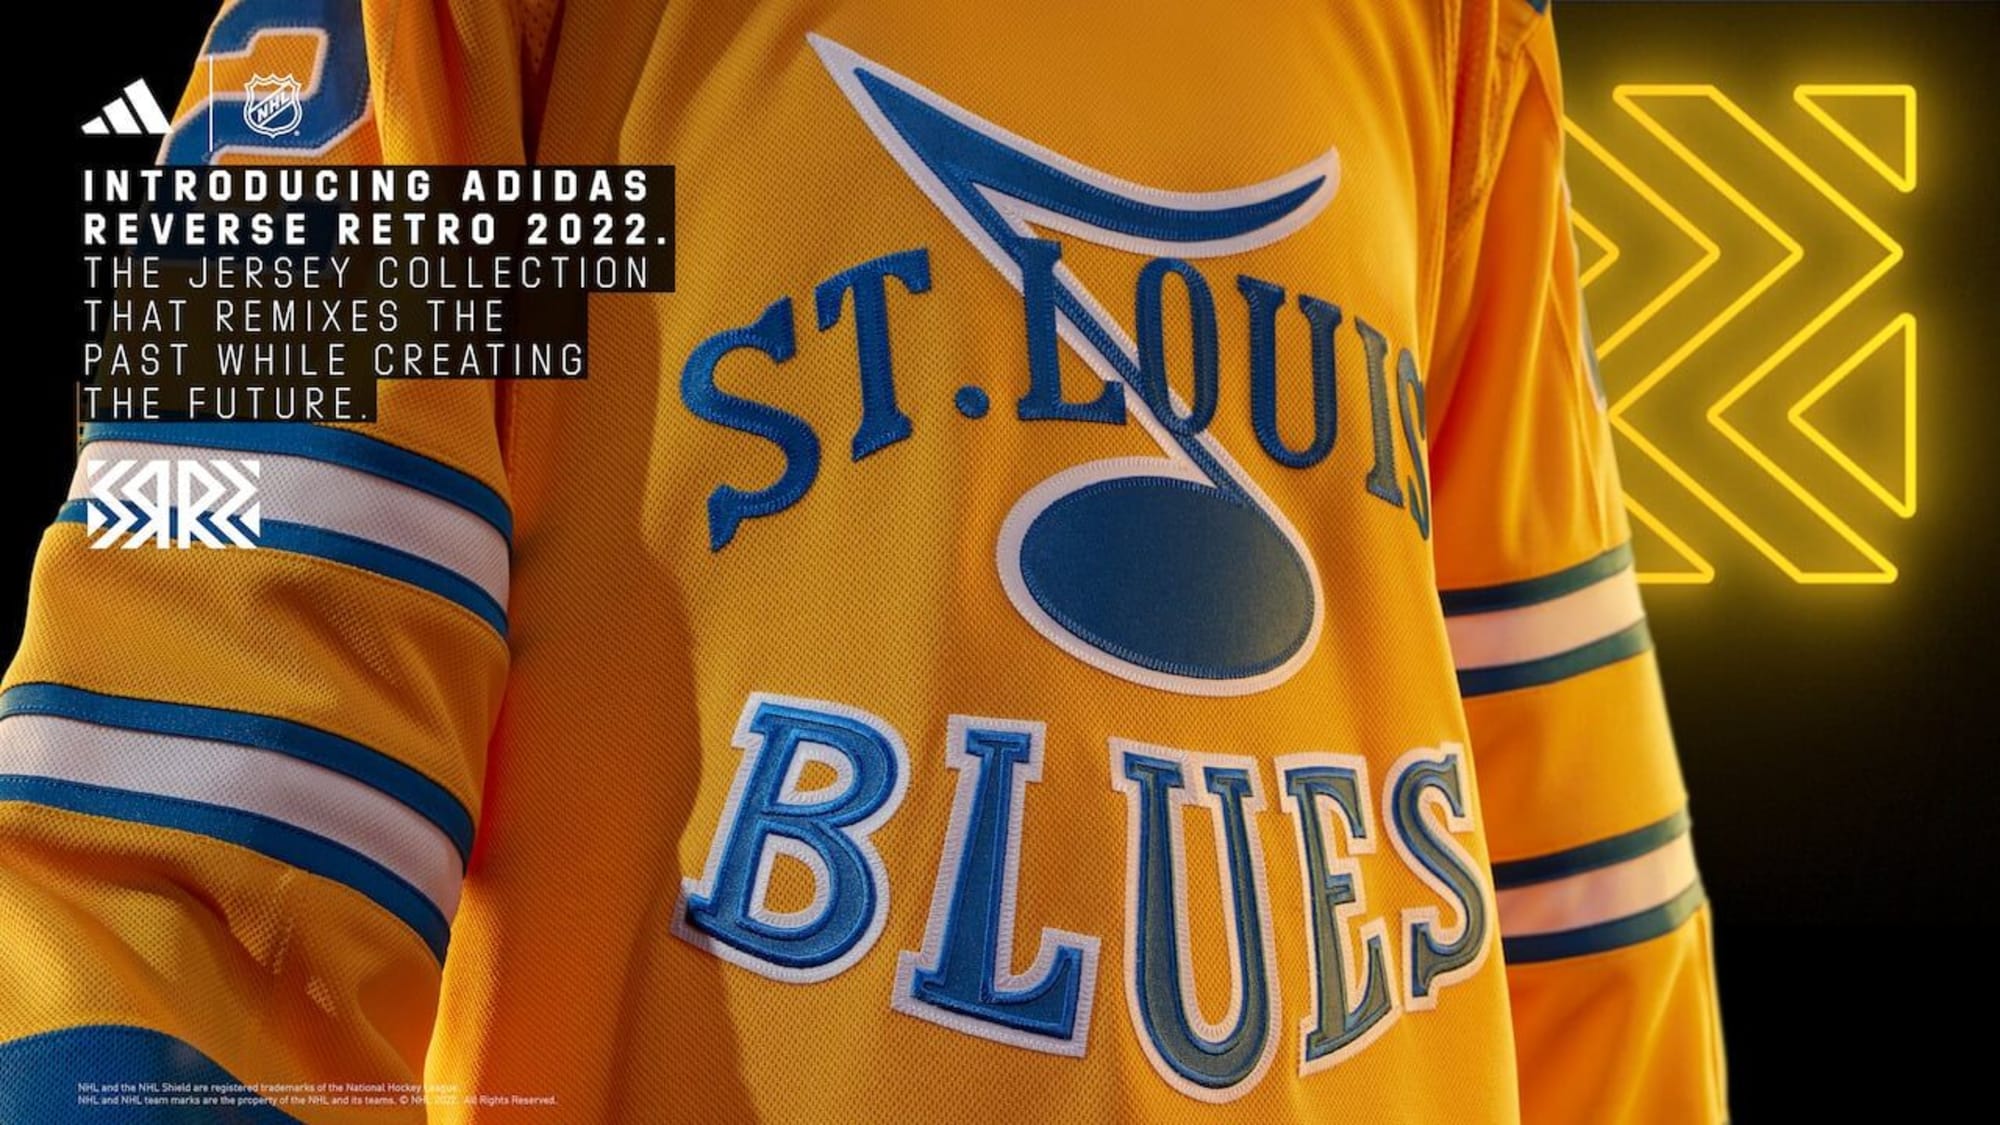 St. Louis Blues Reverse Retro gear available now BVM Sports